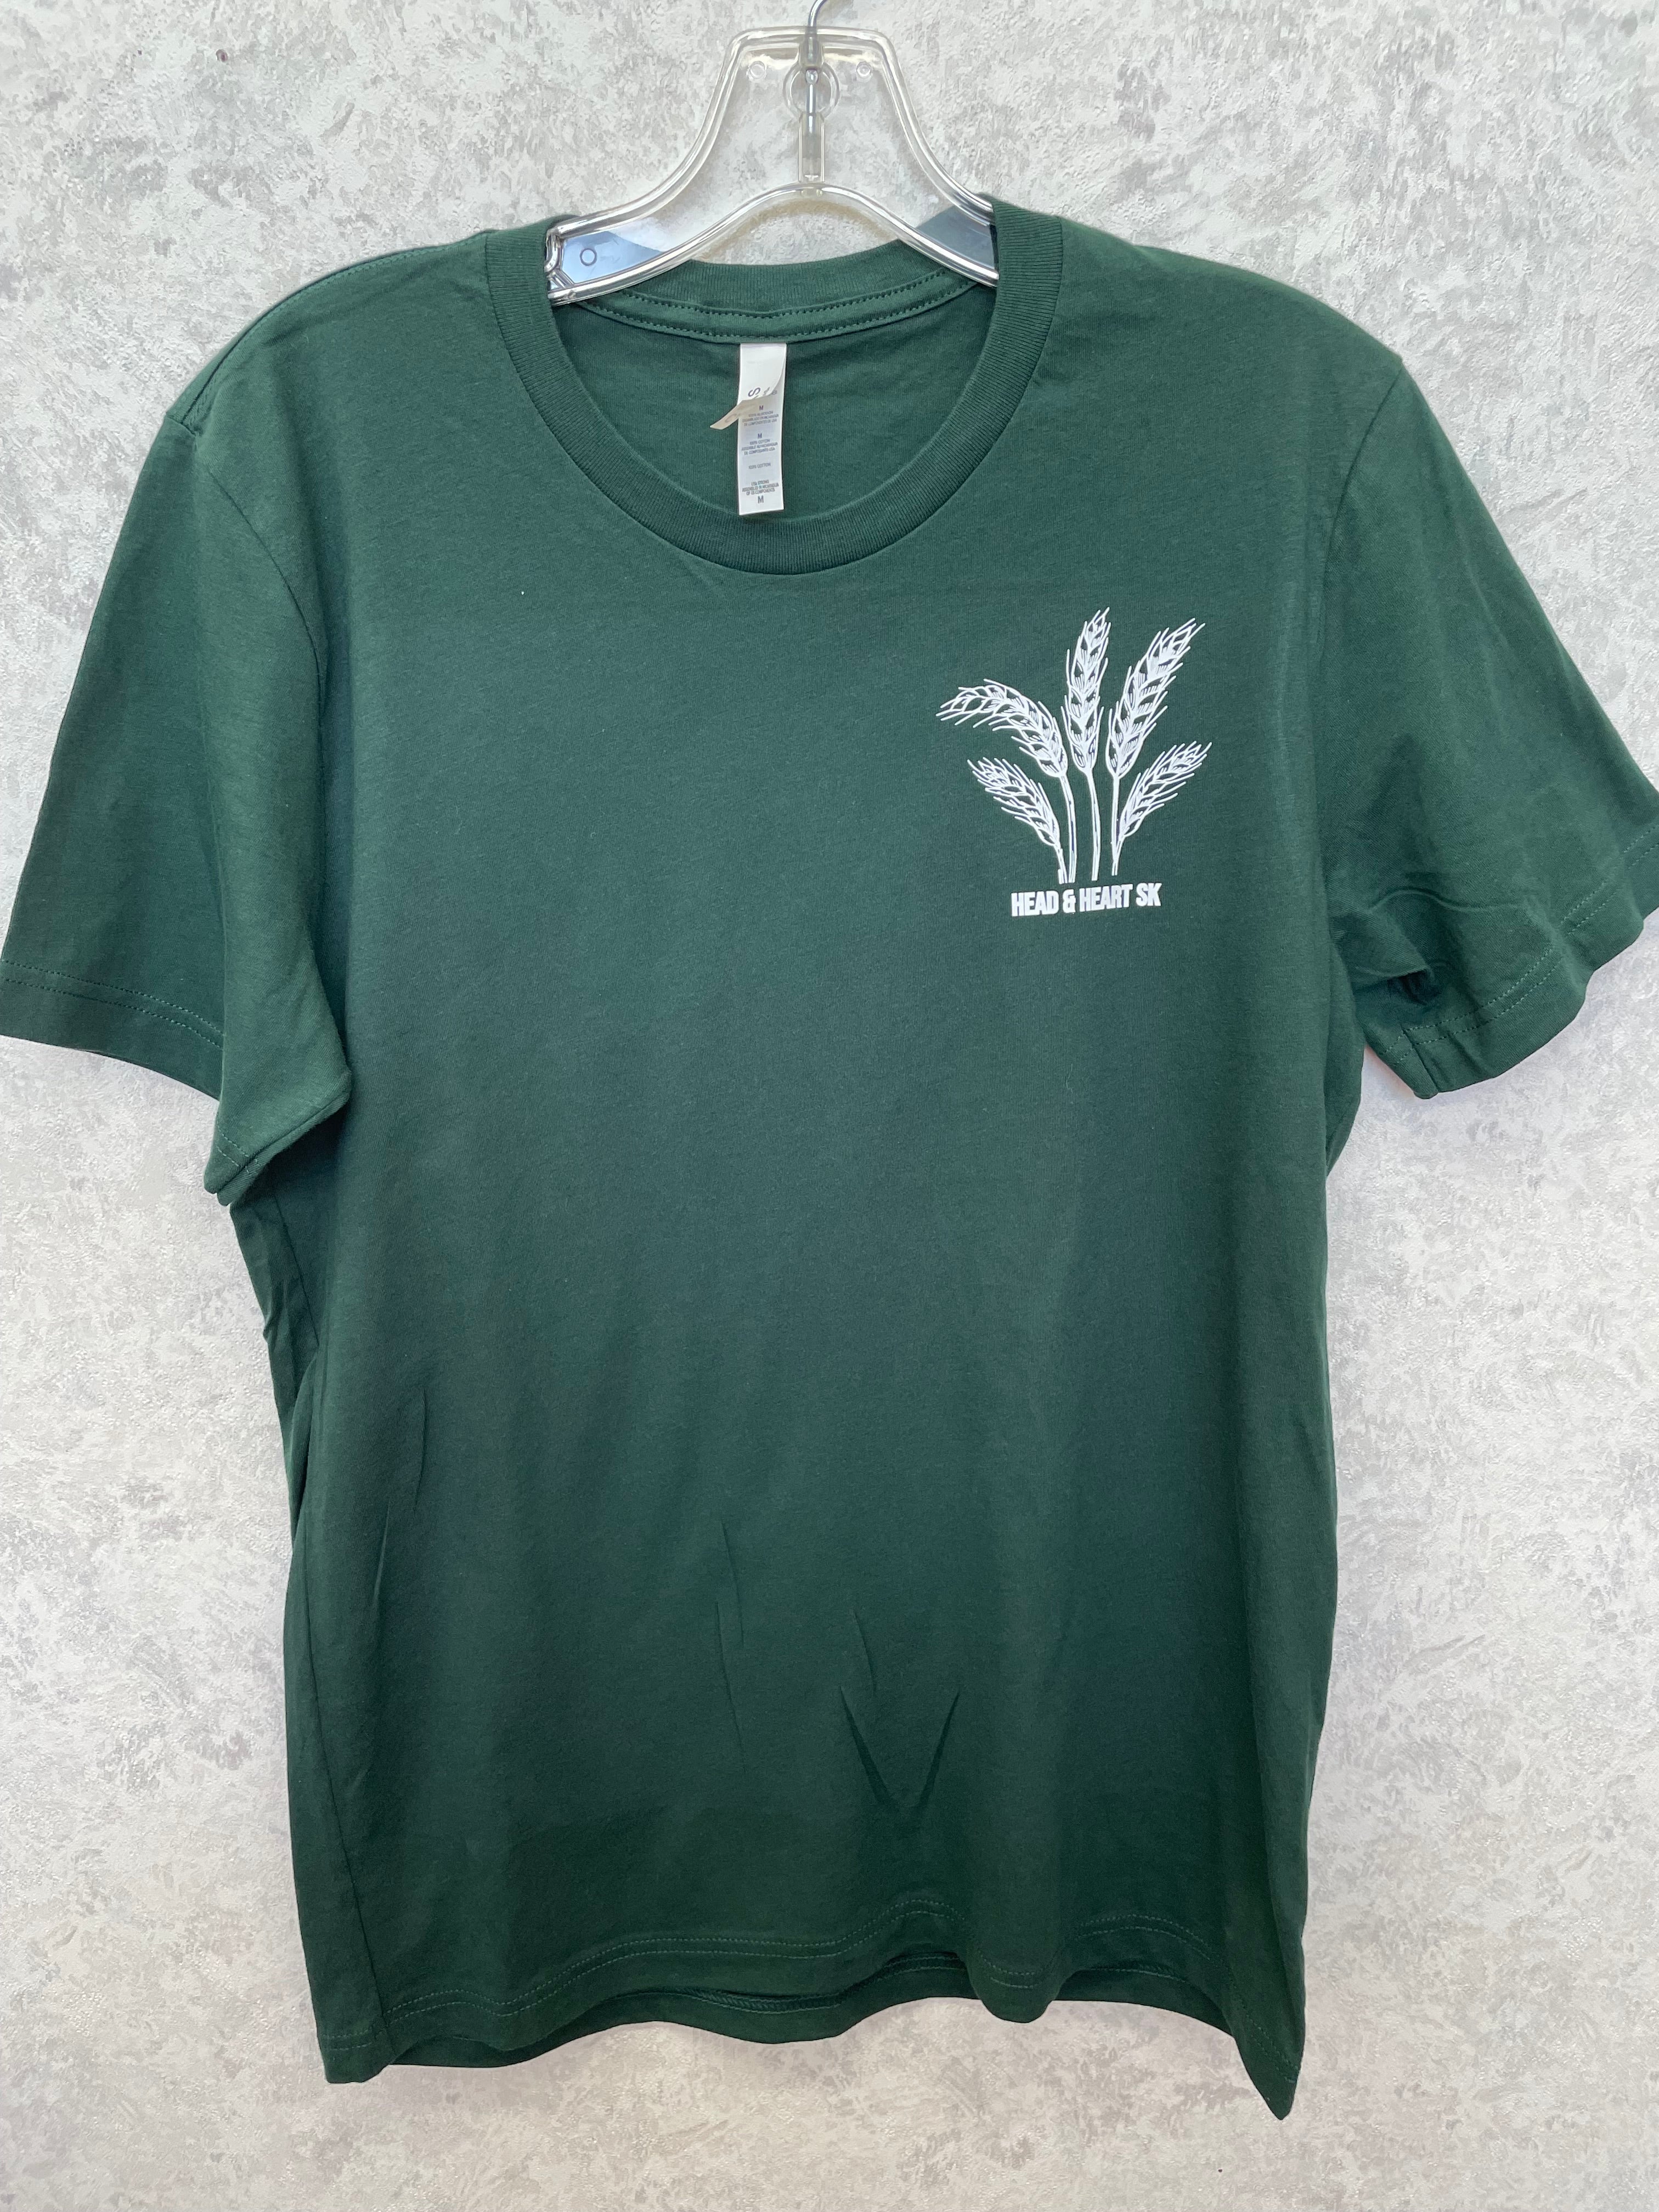 Wheat Harvest T-Shirt